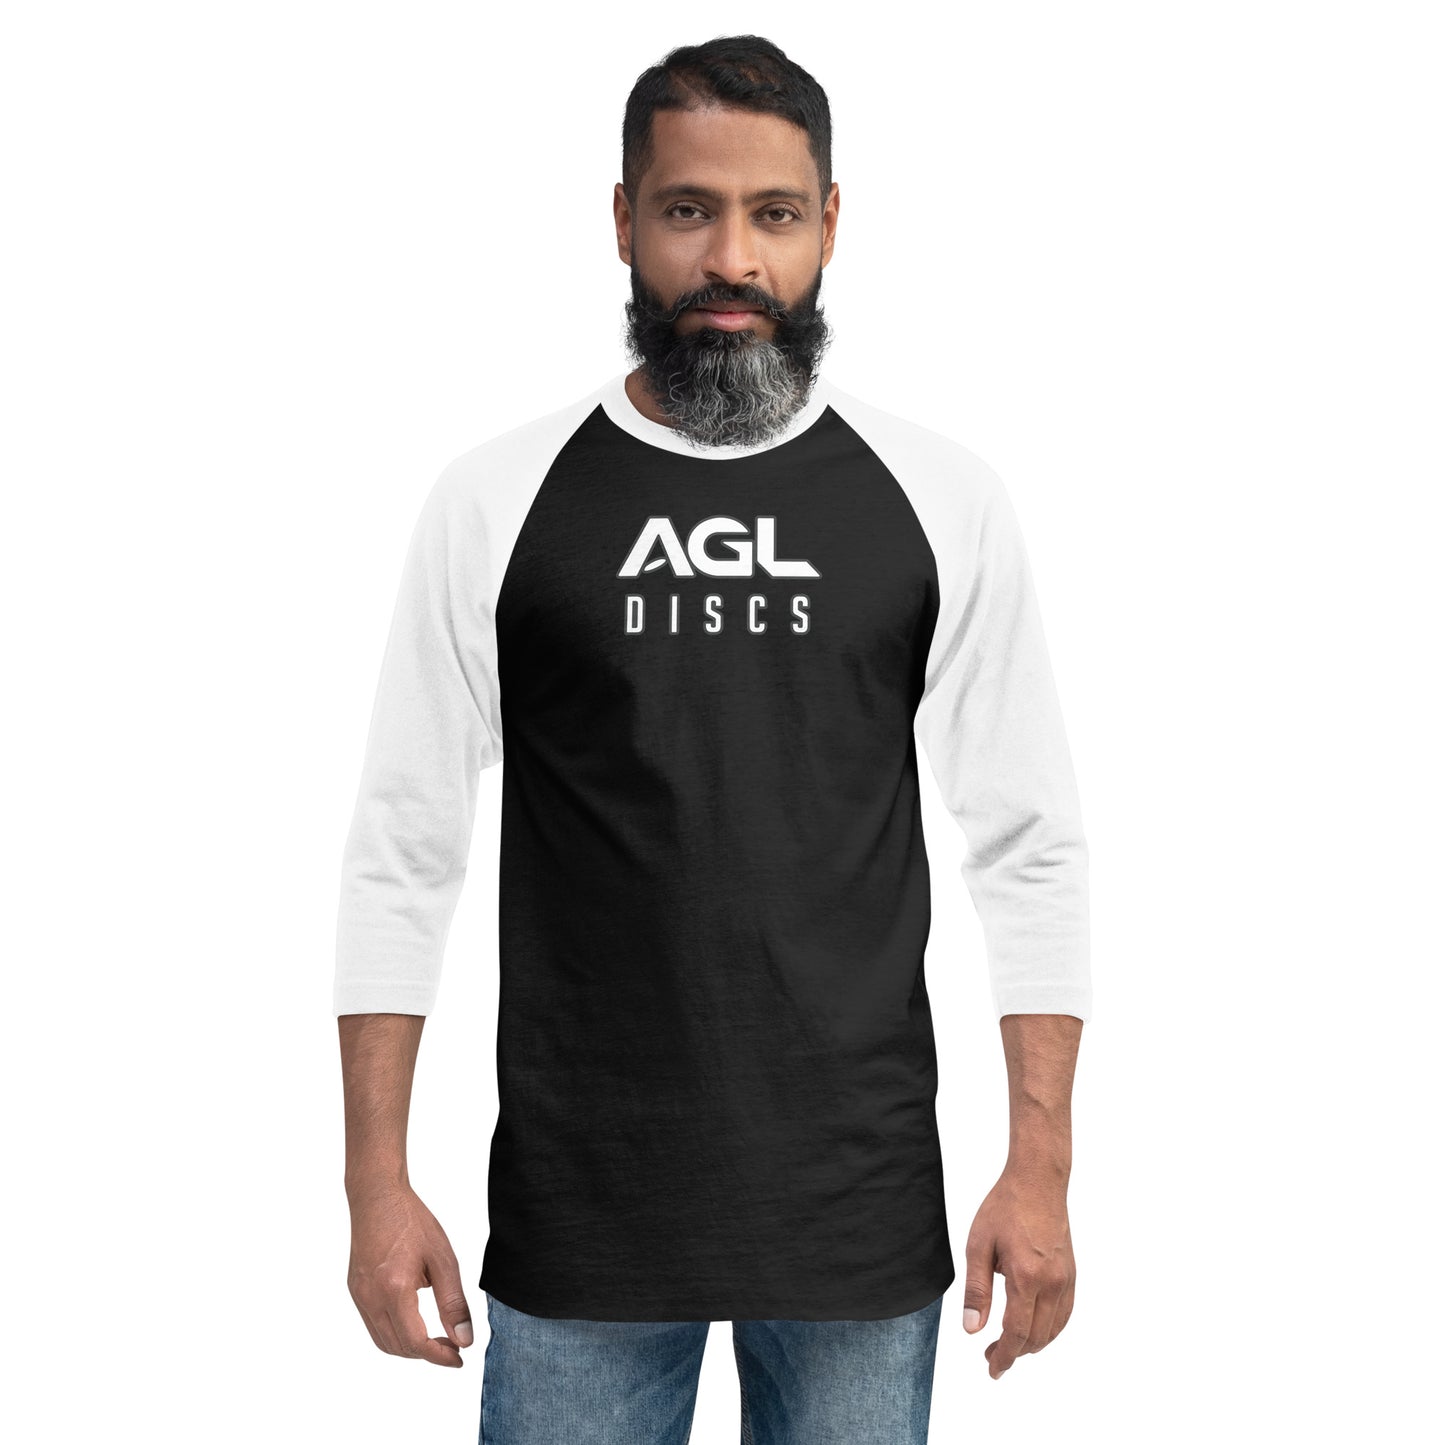 AGL Discs - 3/4 Sleeve Baseball Shirt